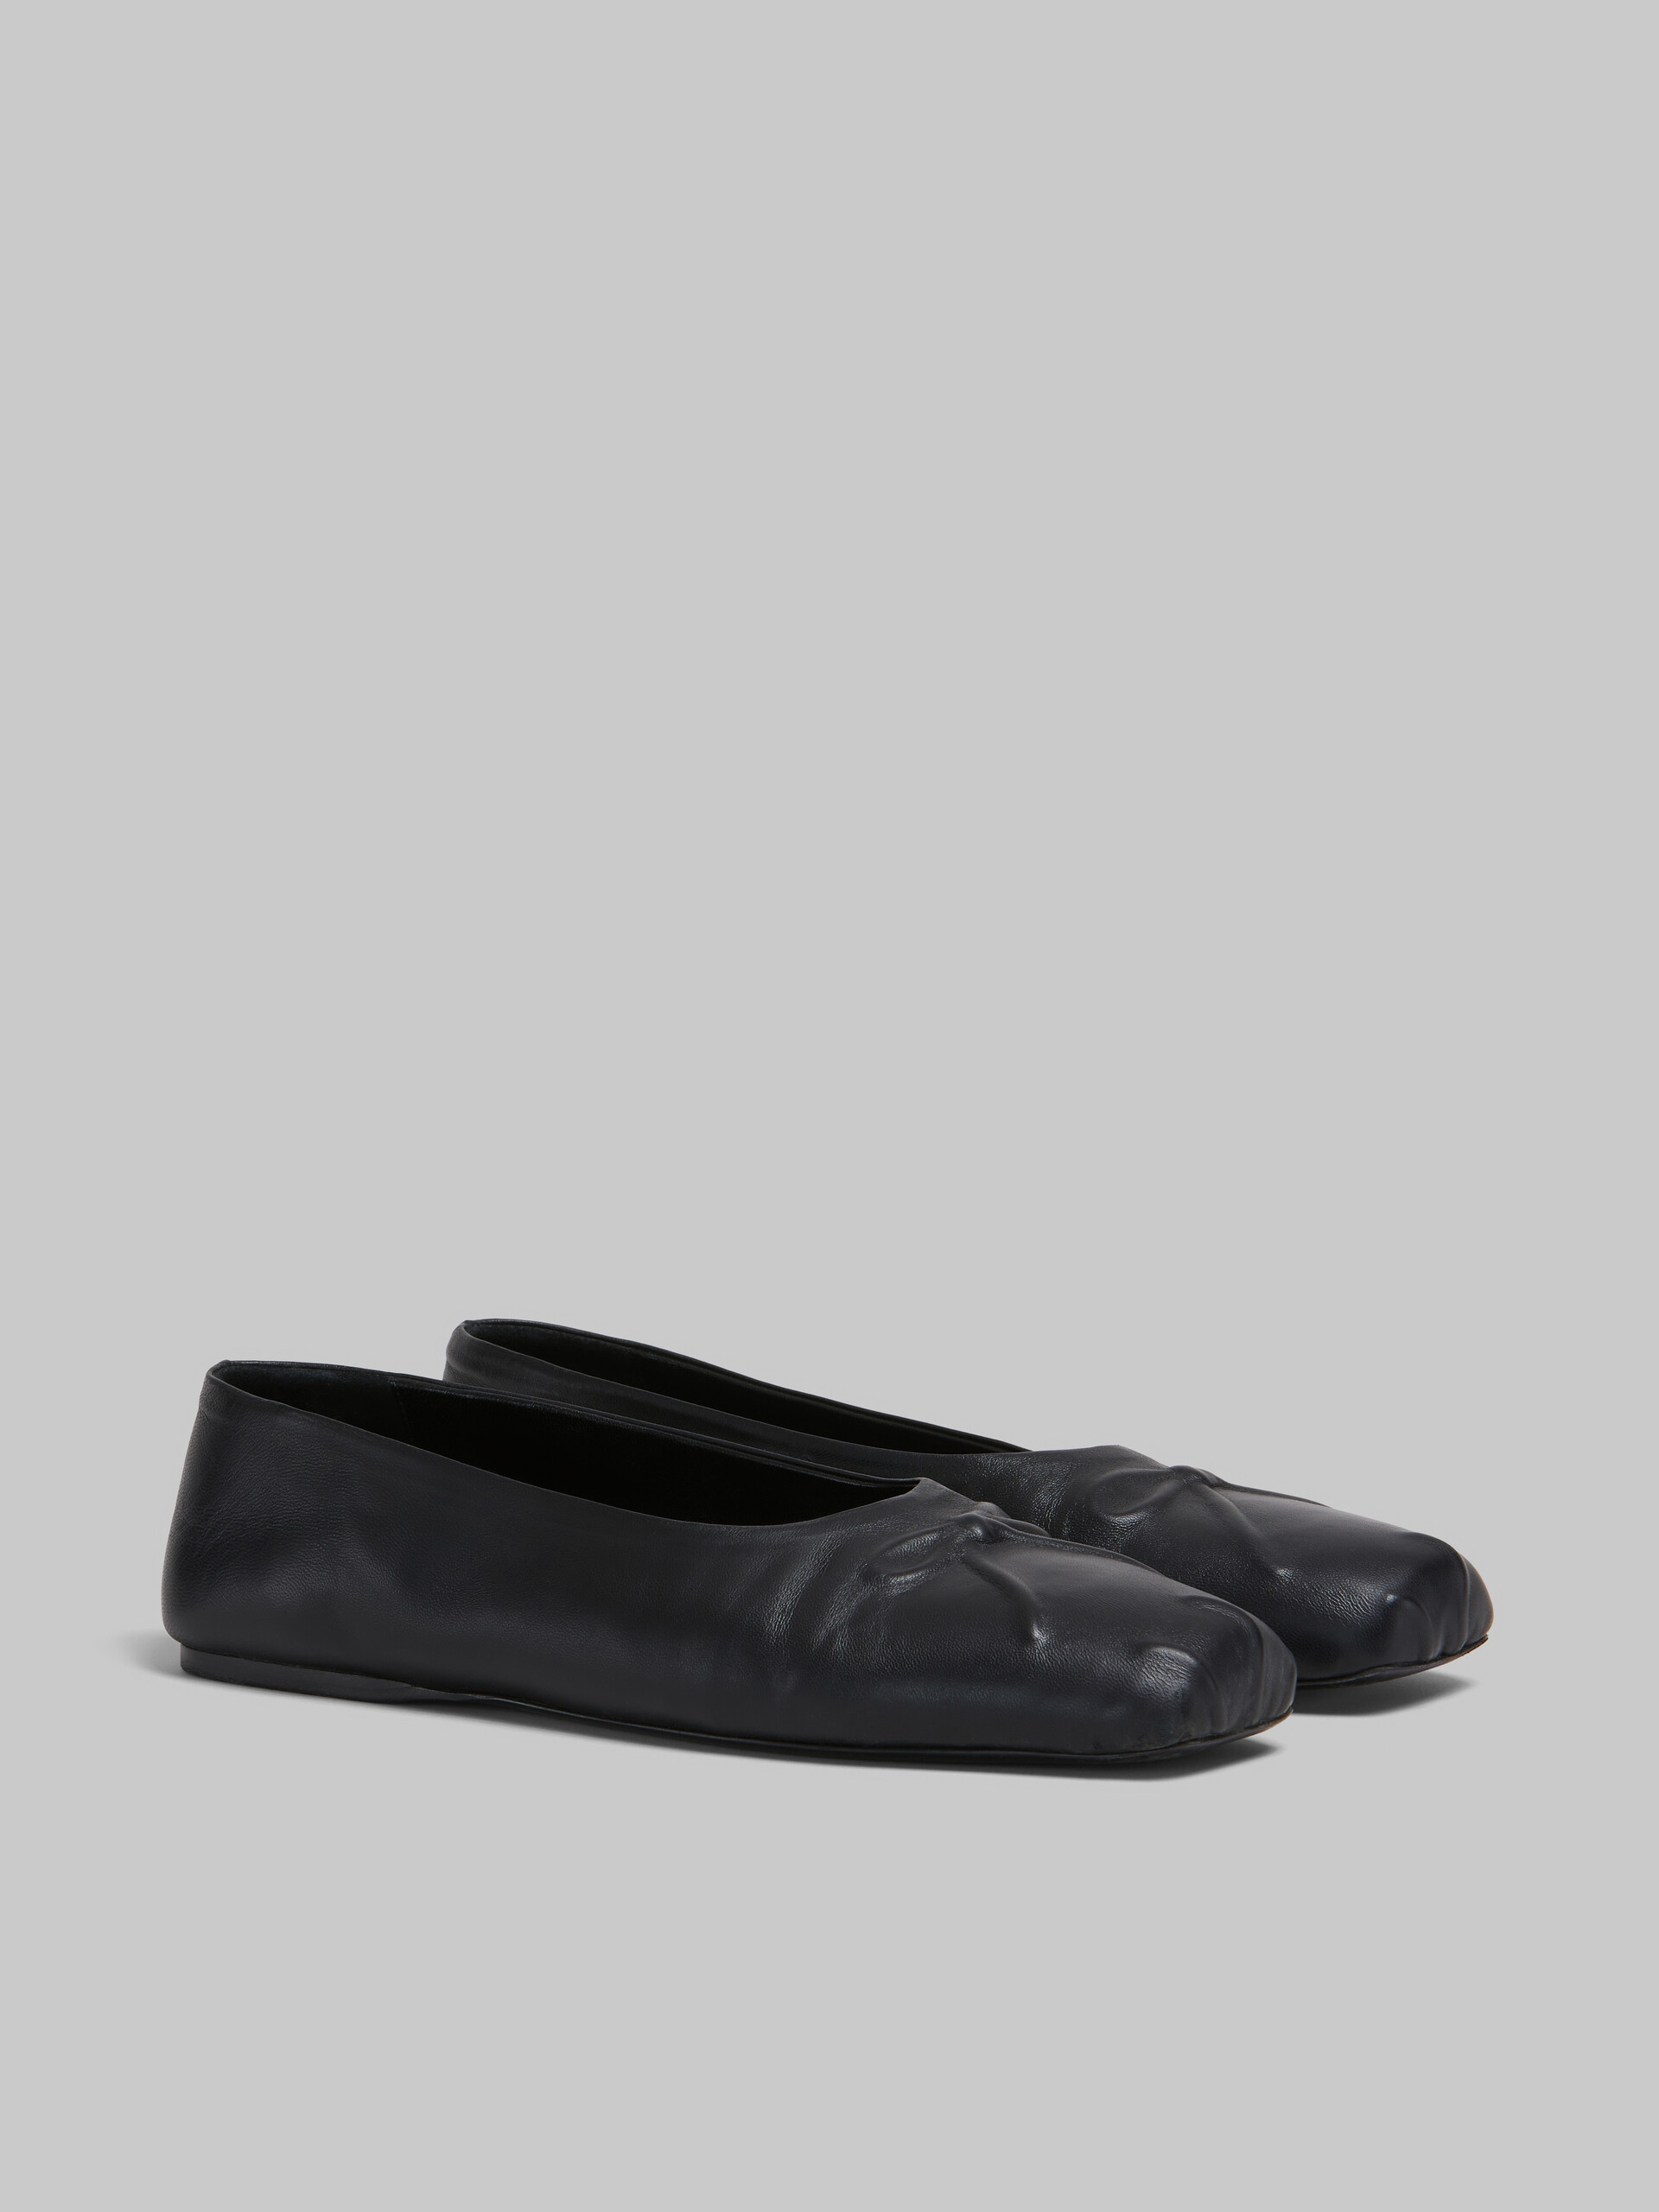 Black nappa leather Little Bow ballet flat - Ballet Shoes - Image 2